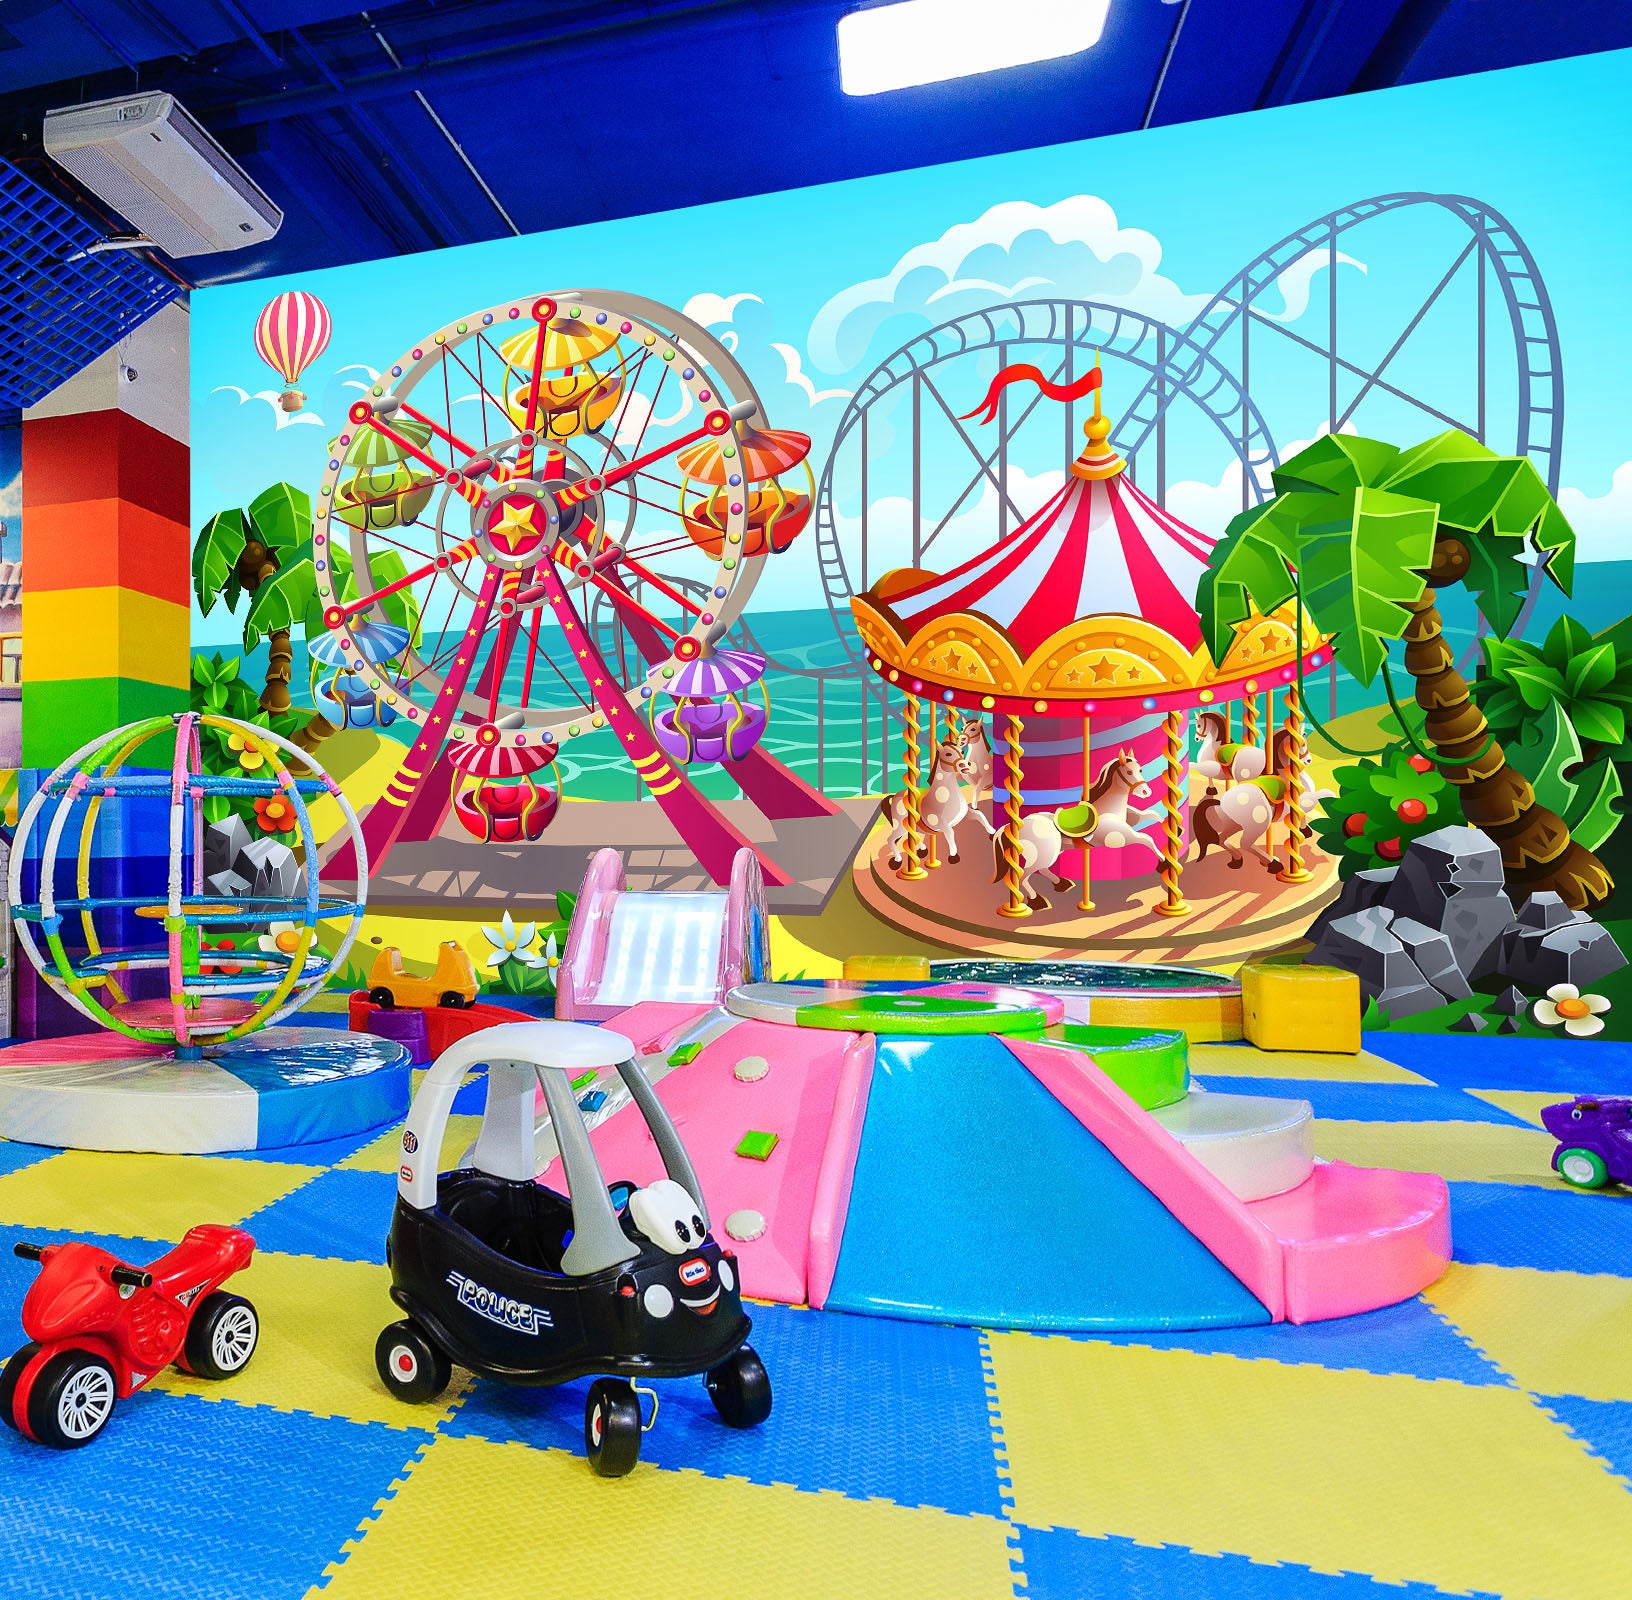 3D Rides 1415 Indoor Play Centres Wall Murals